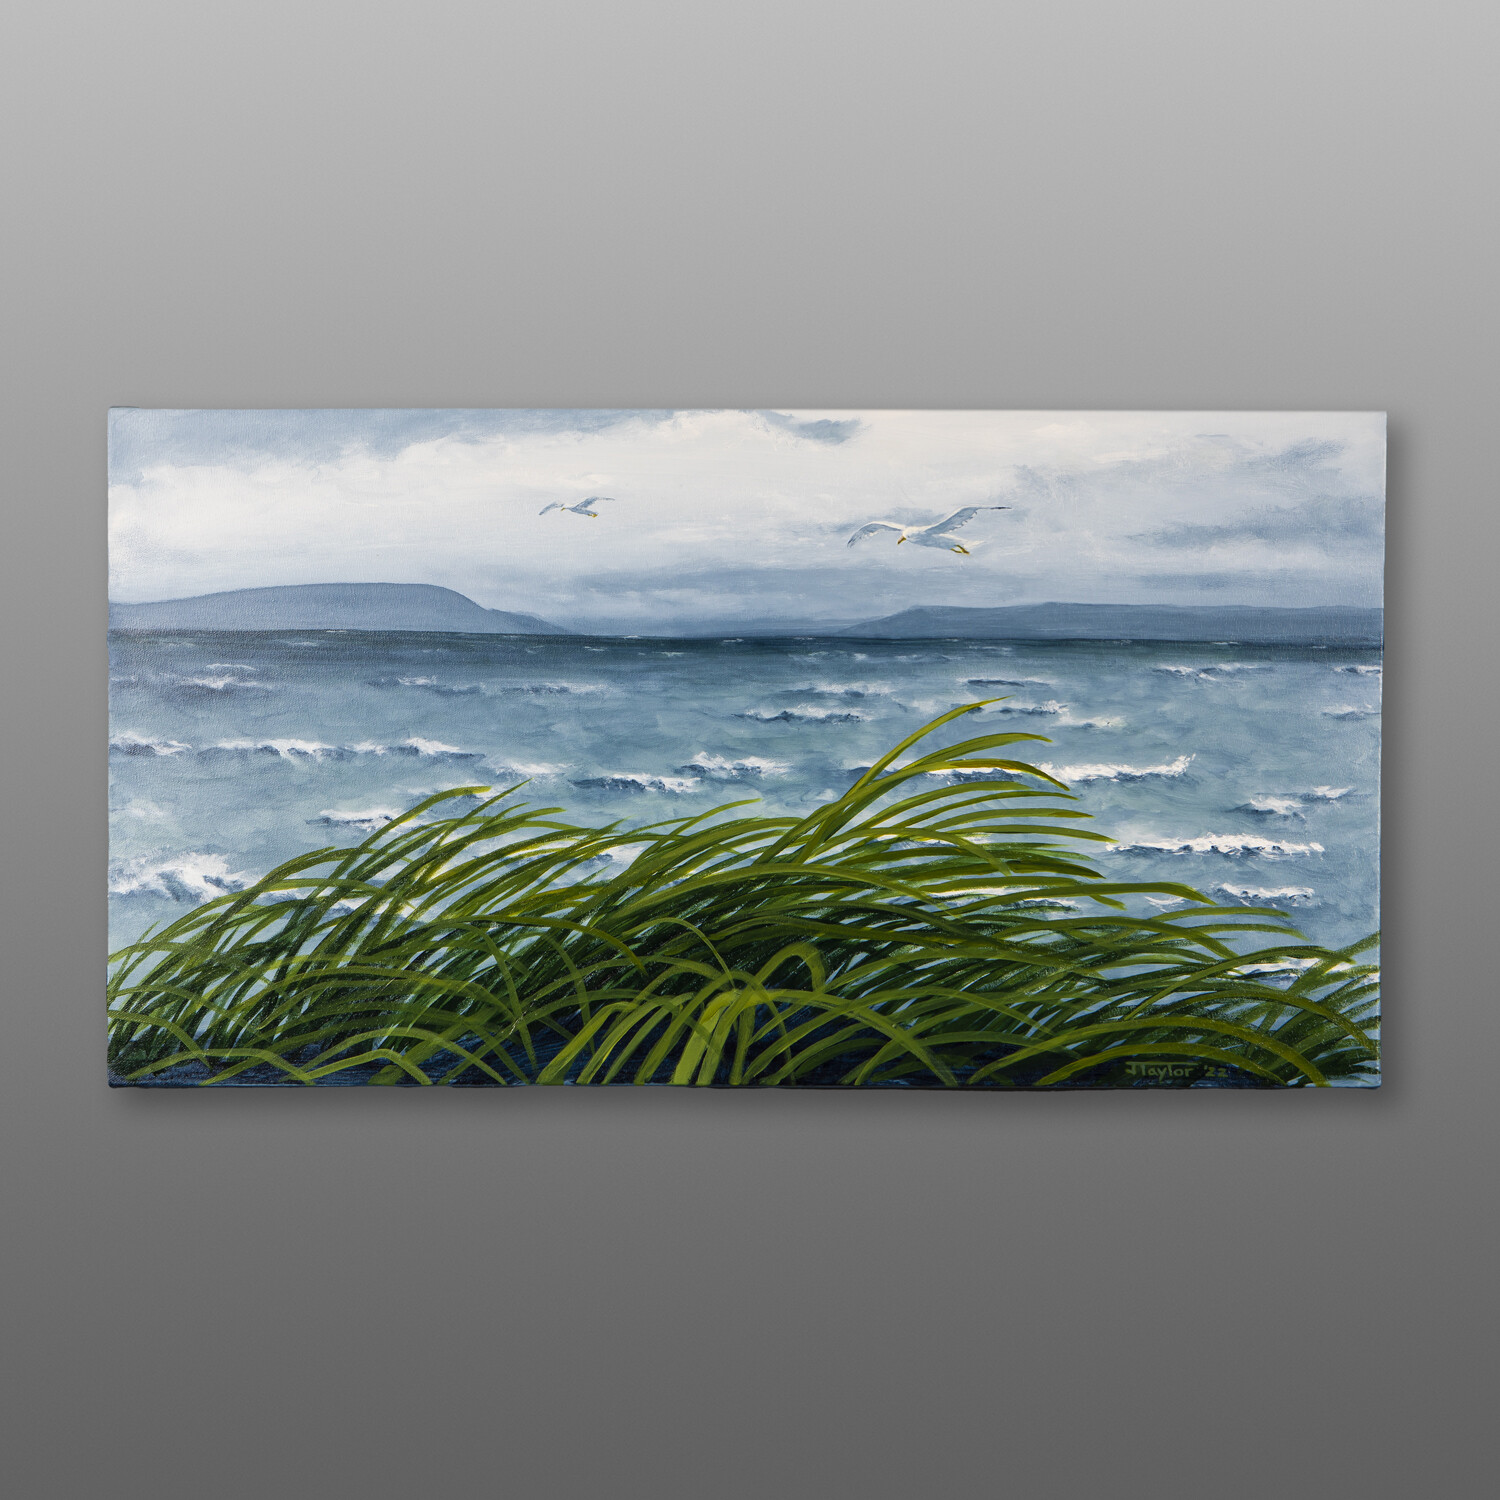 Riding the Wind
Jean Taylor
Tlingit
Acrylic on canvas
30" x 16" x 1½”
$1450